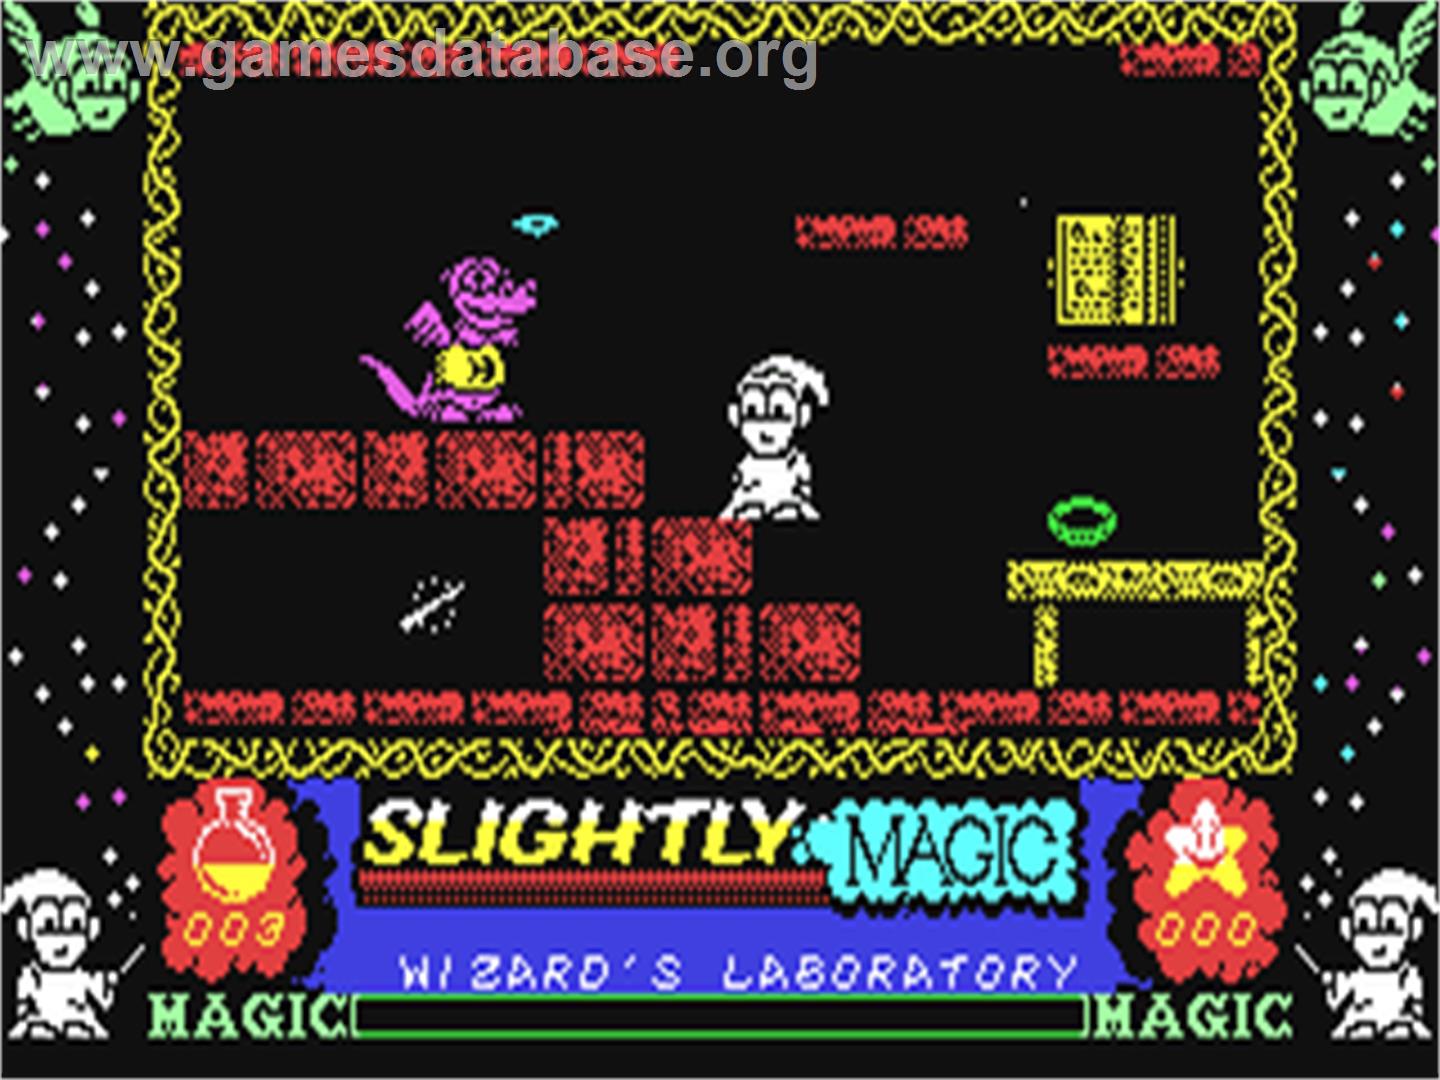 Slightly Magic - Commodore 64 - Artwork - In Game